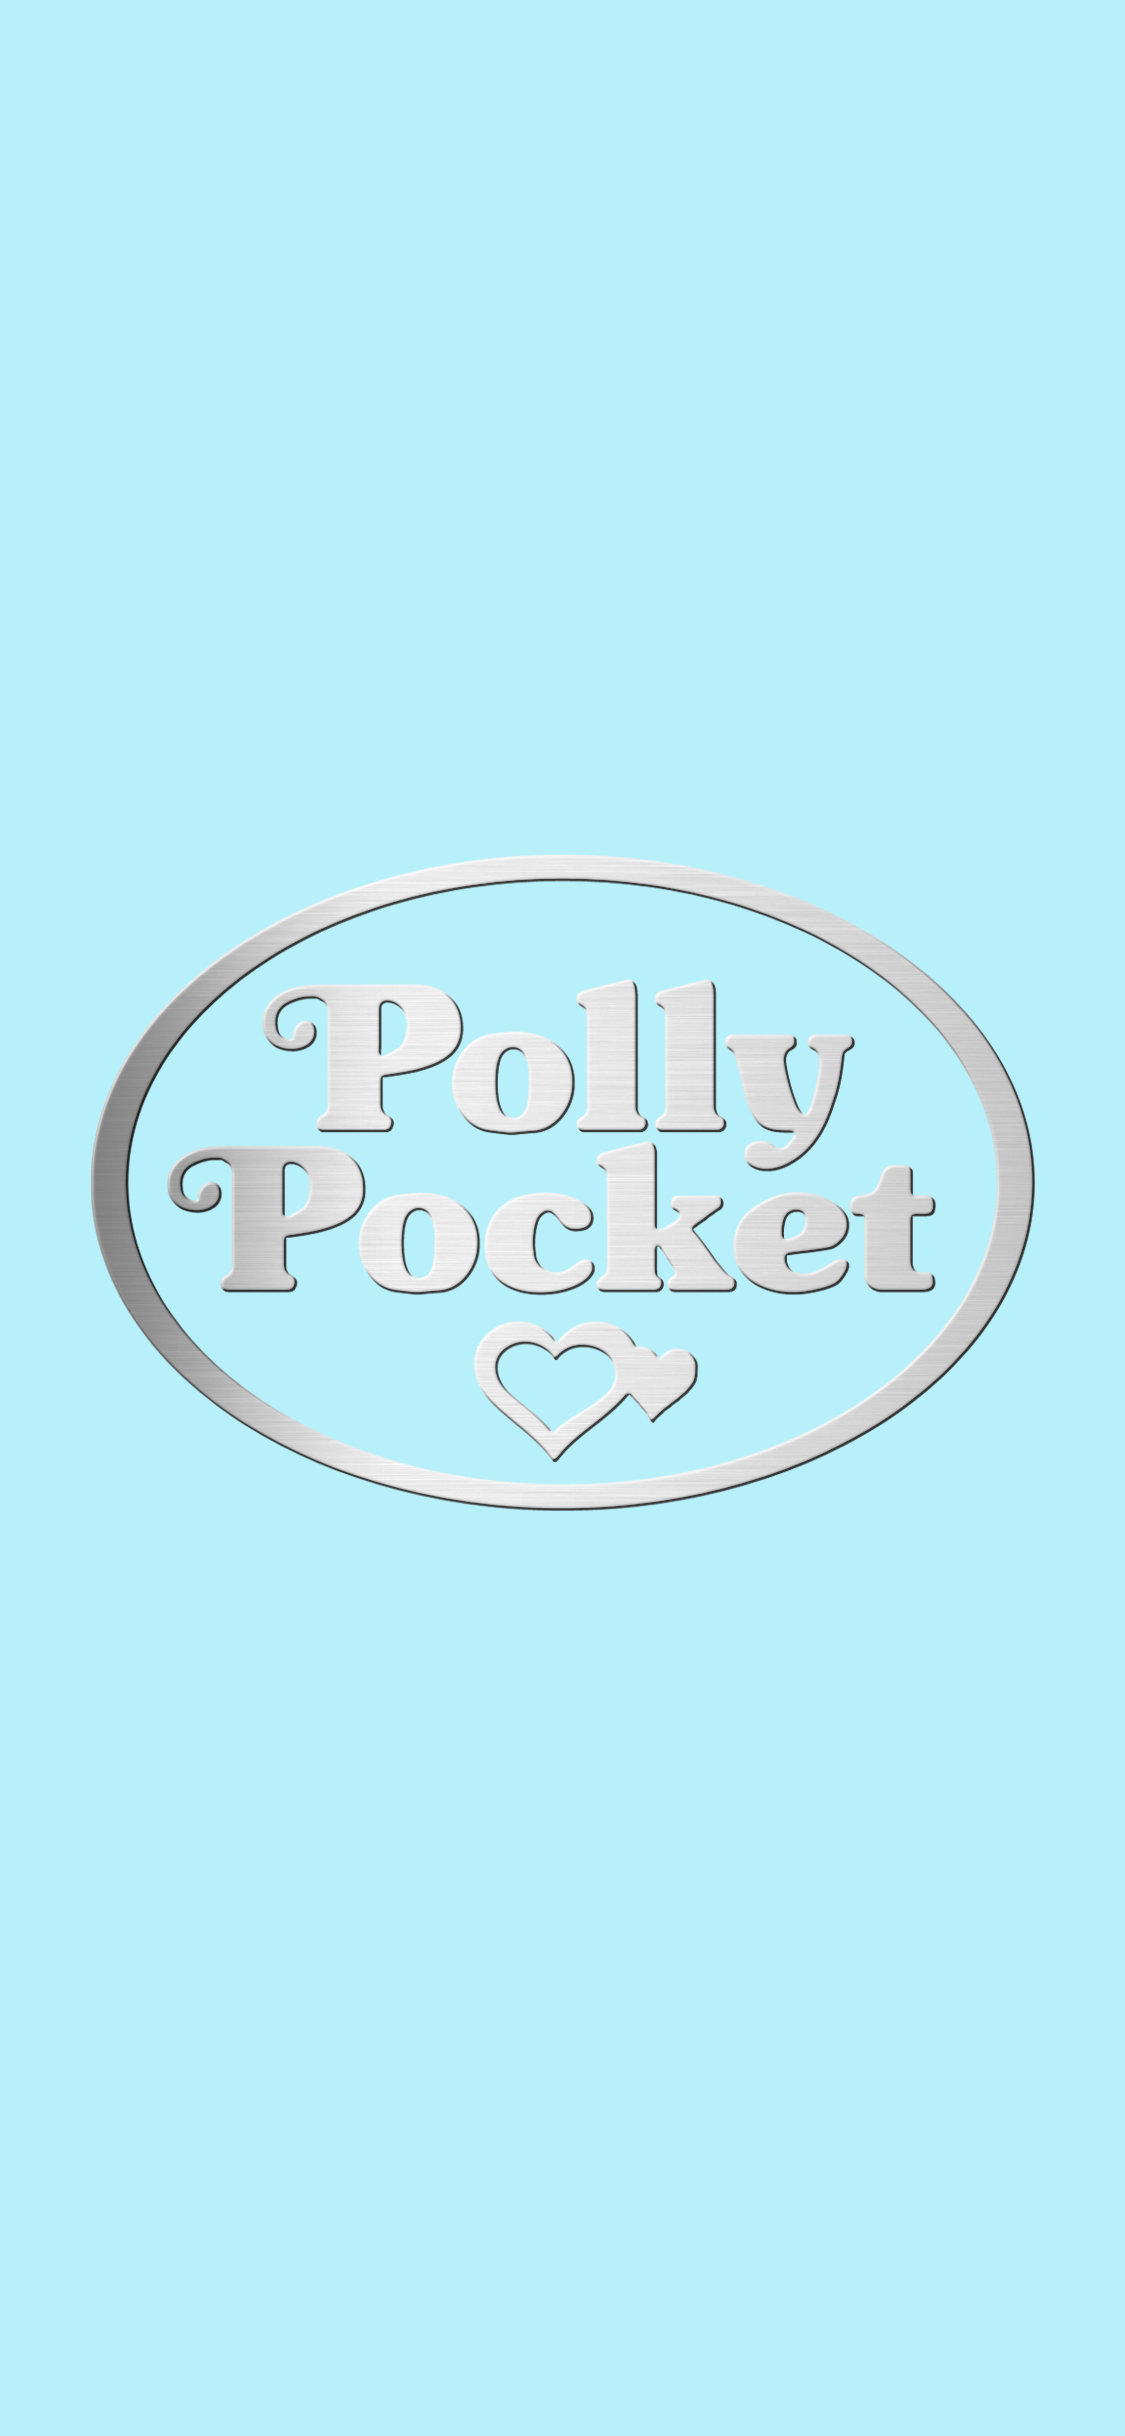 phone wallpaper displaying polly pocket (blue/silver)